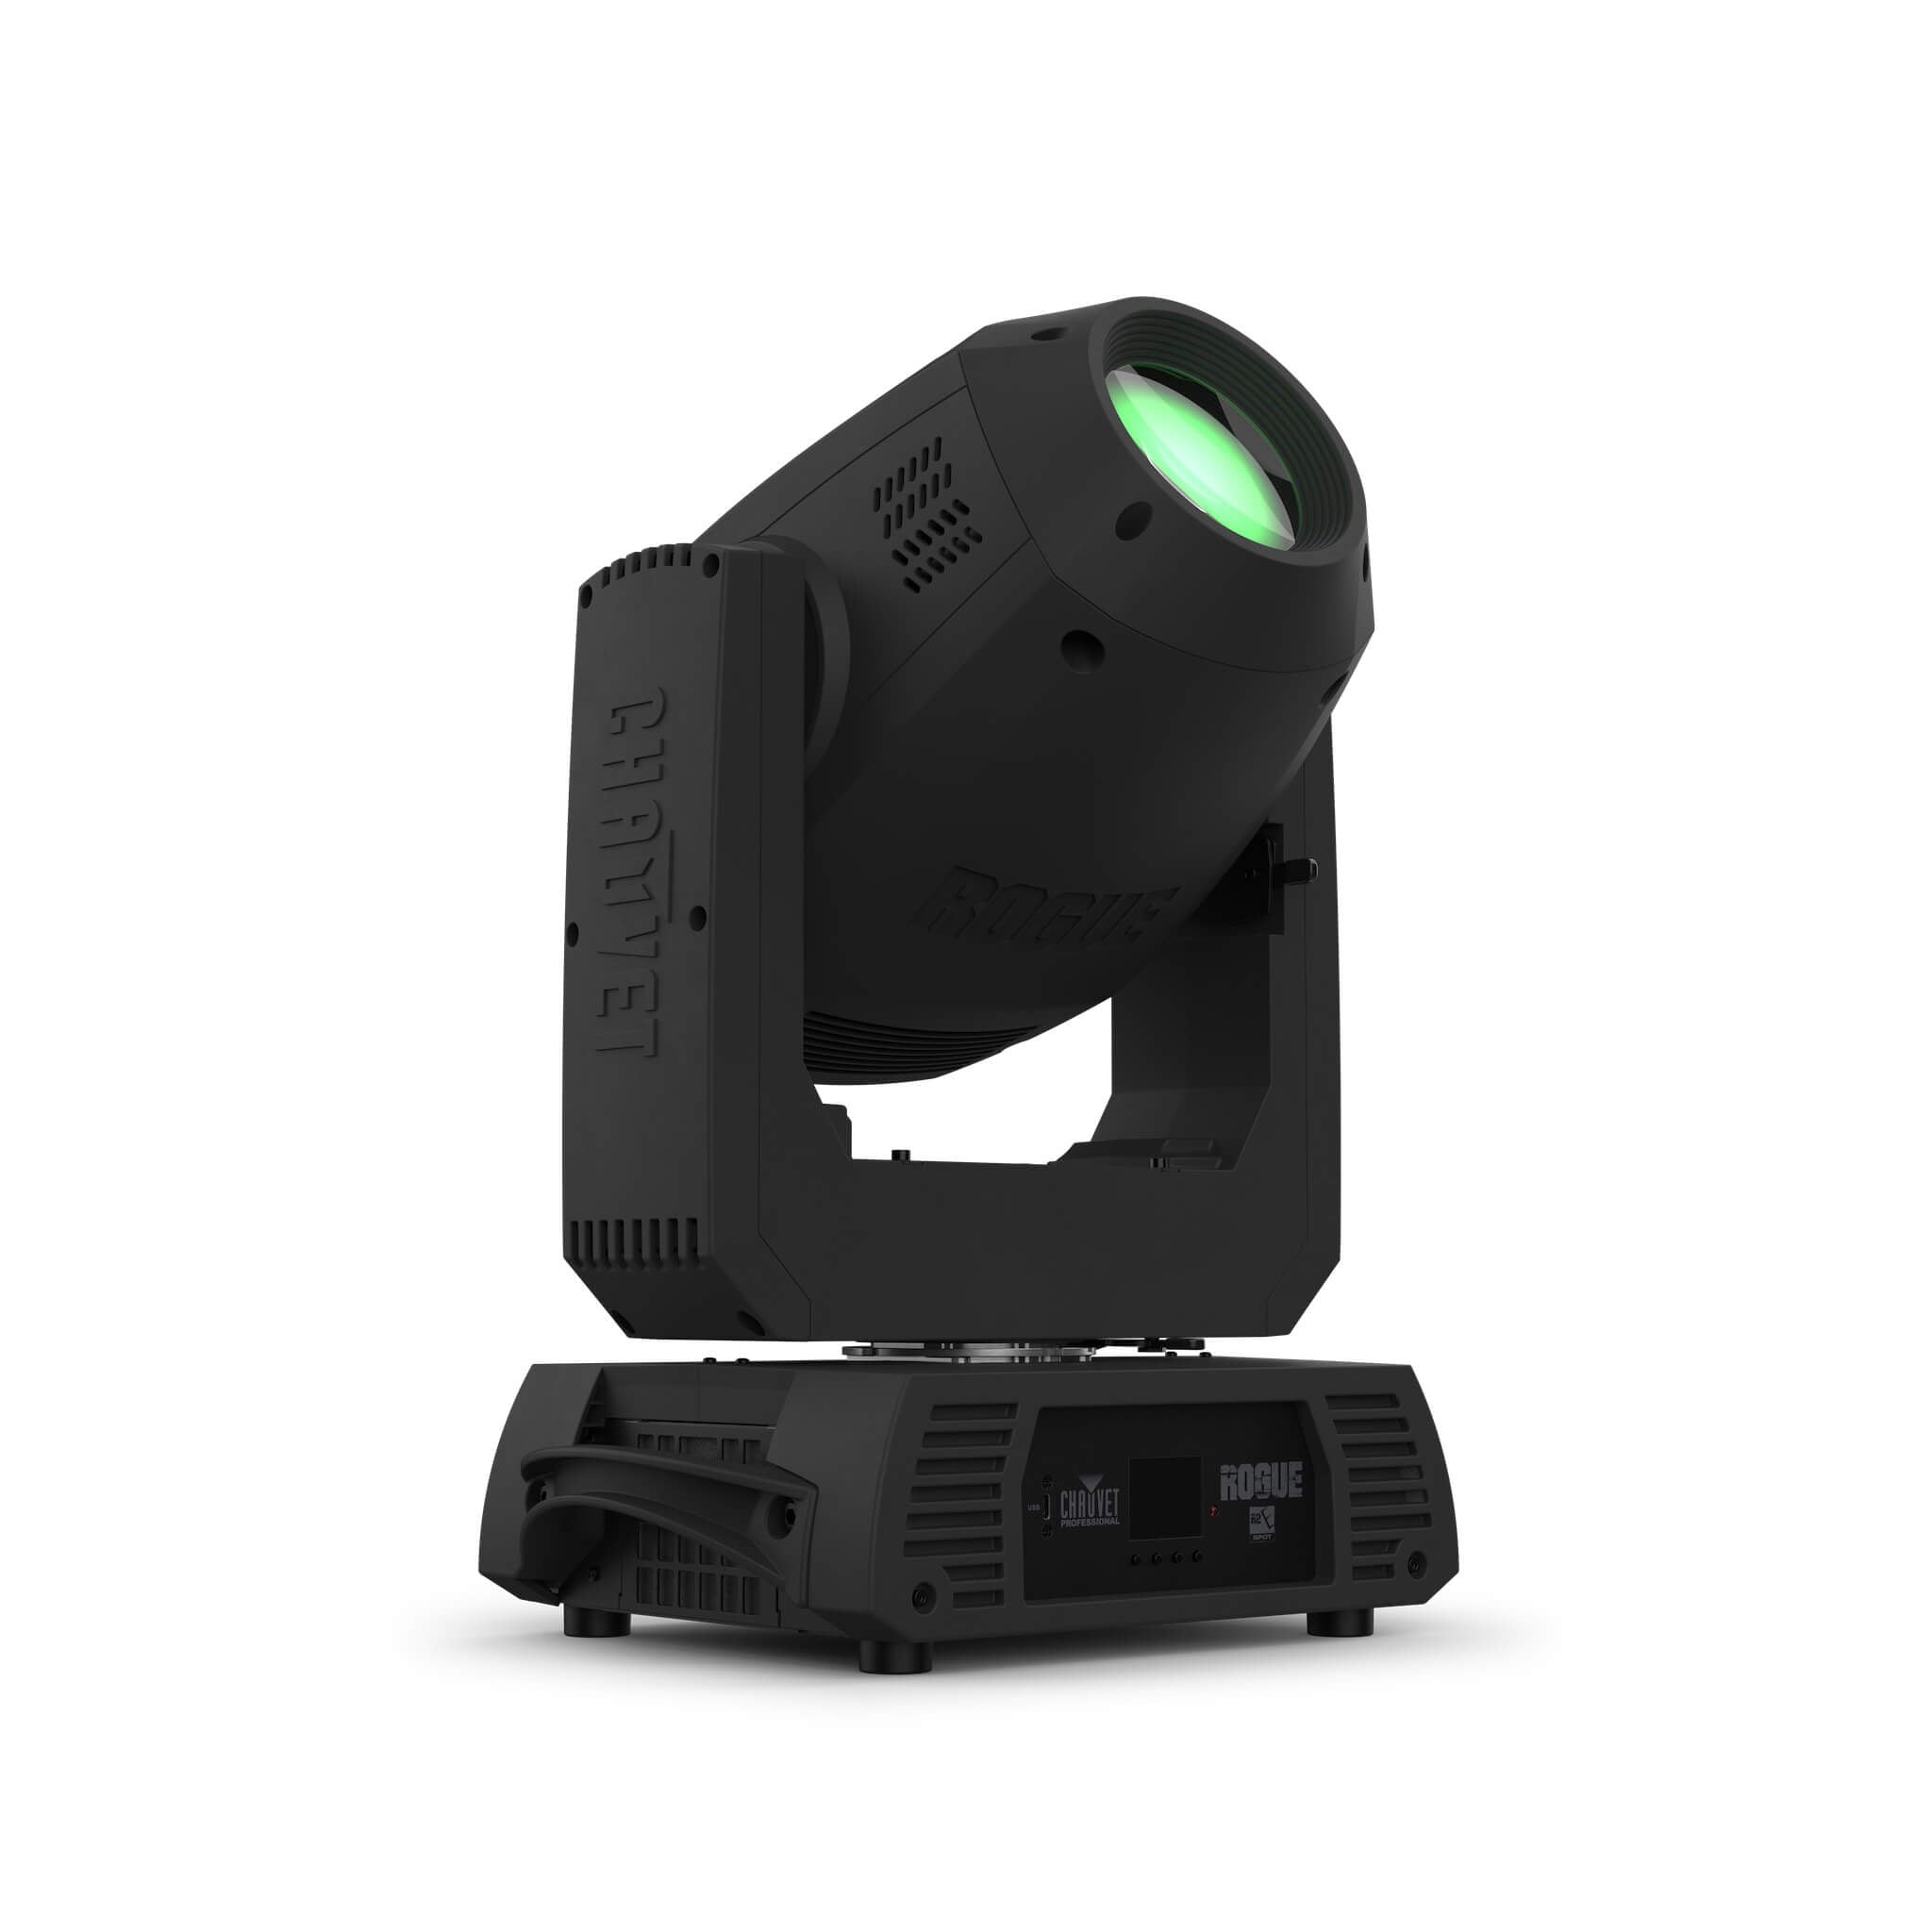 Chauvet Professional Rogue R2E Spot - 350W LED Moving Head Fixture, right